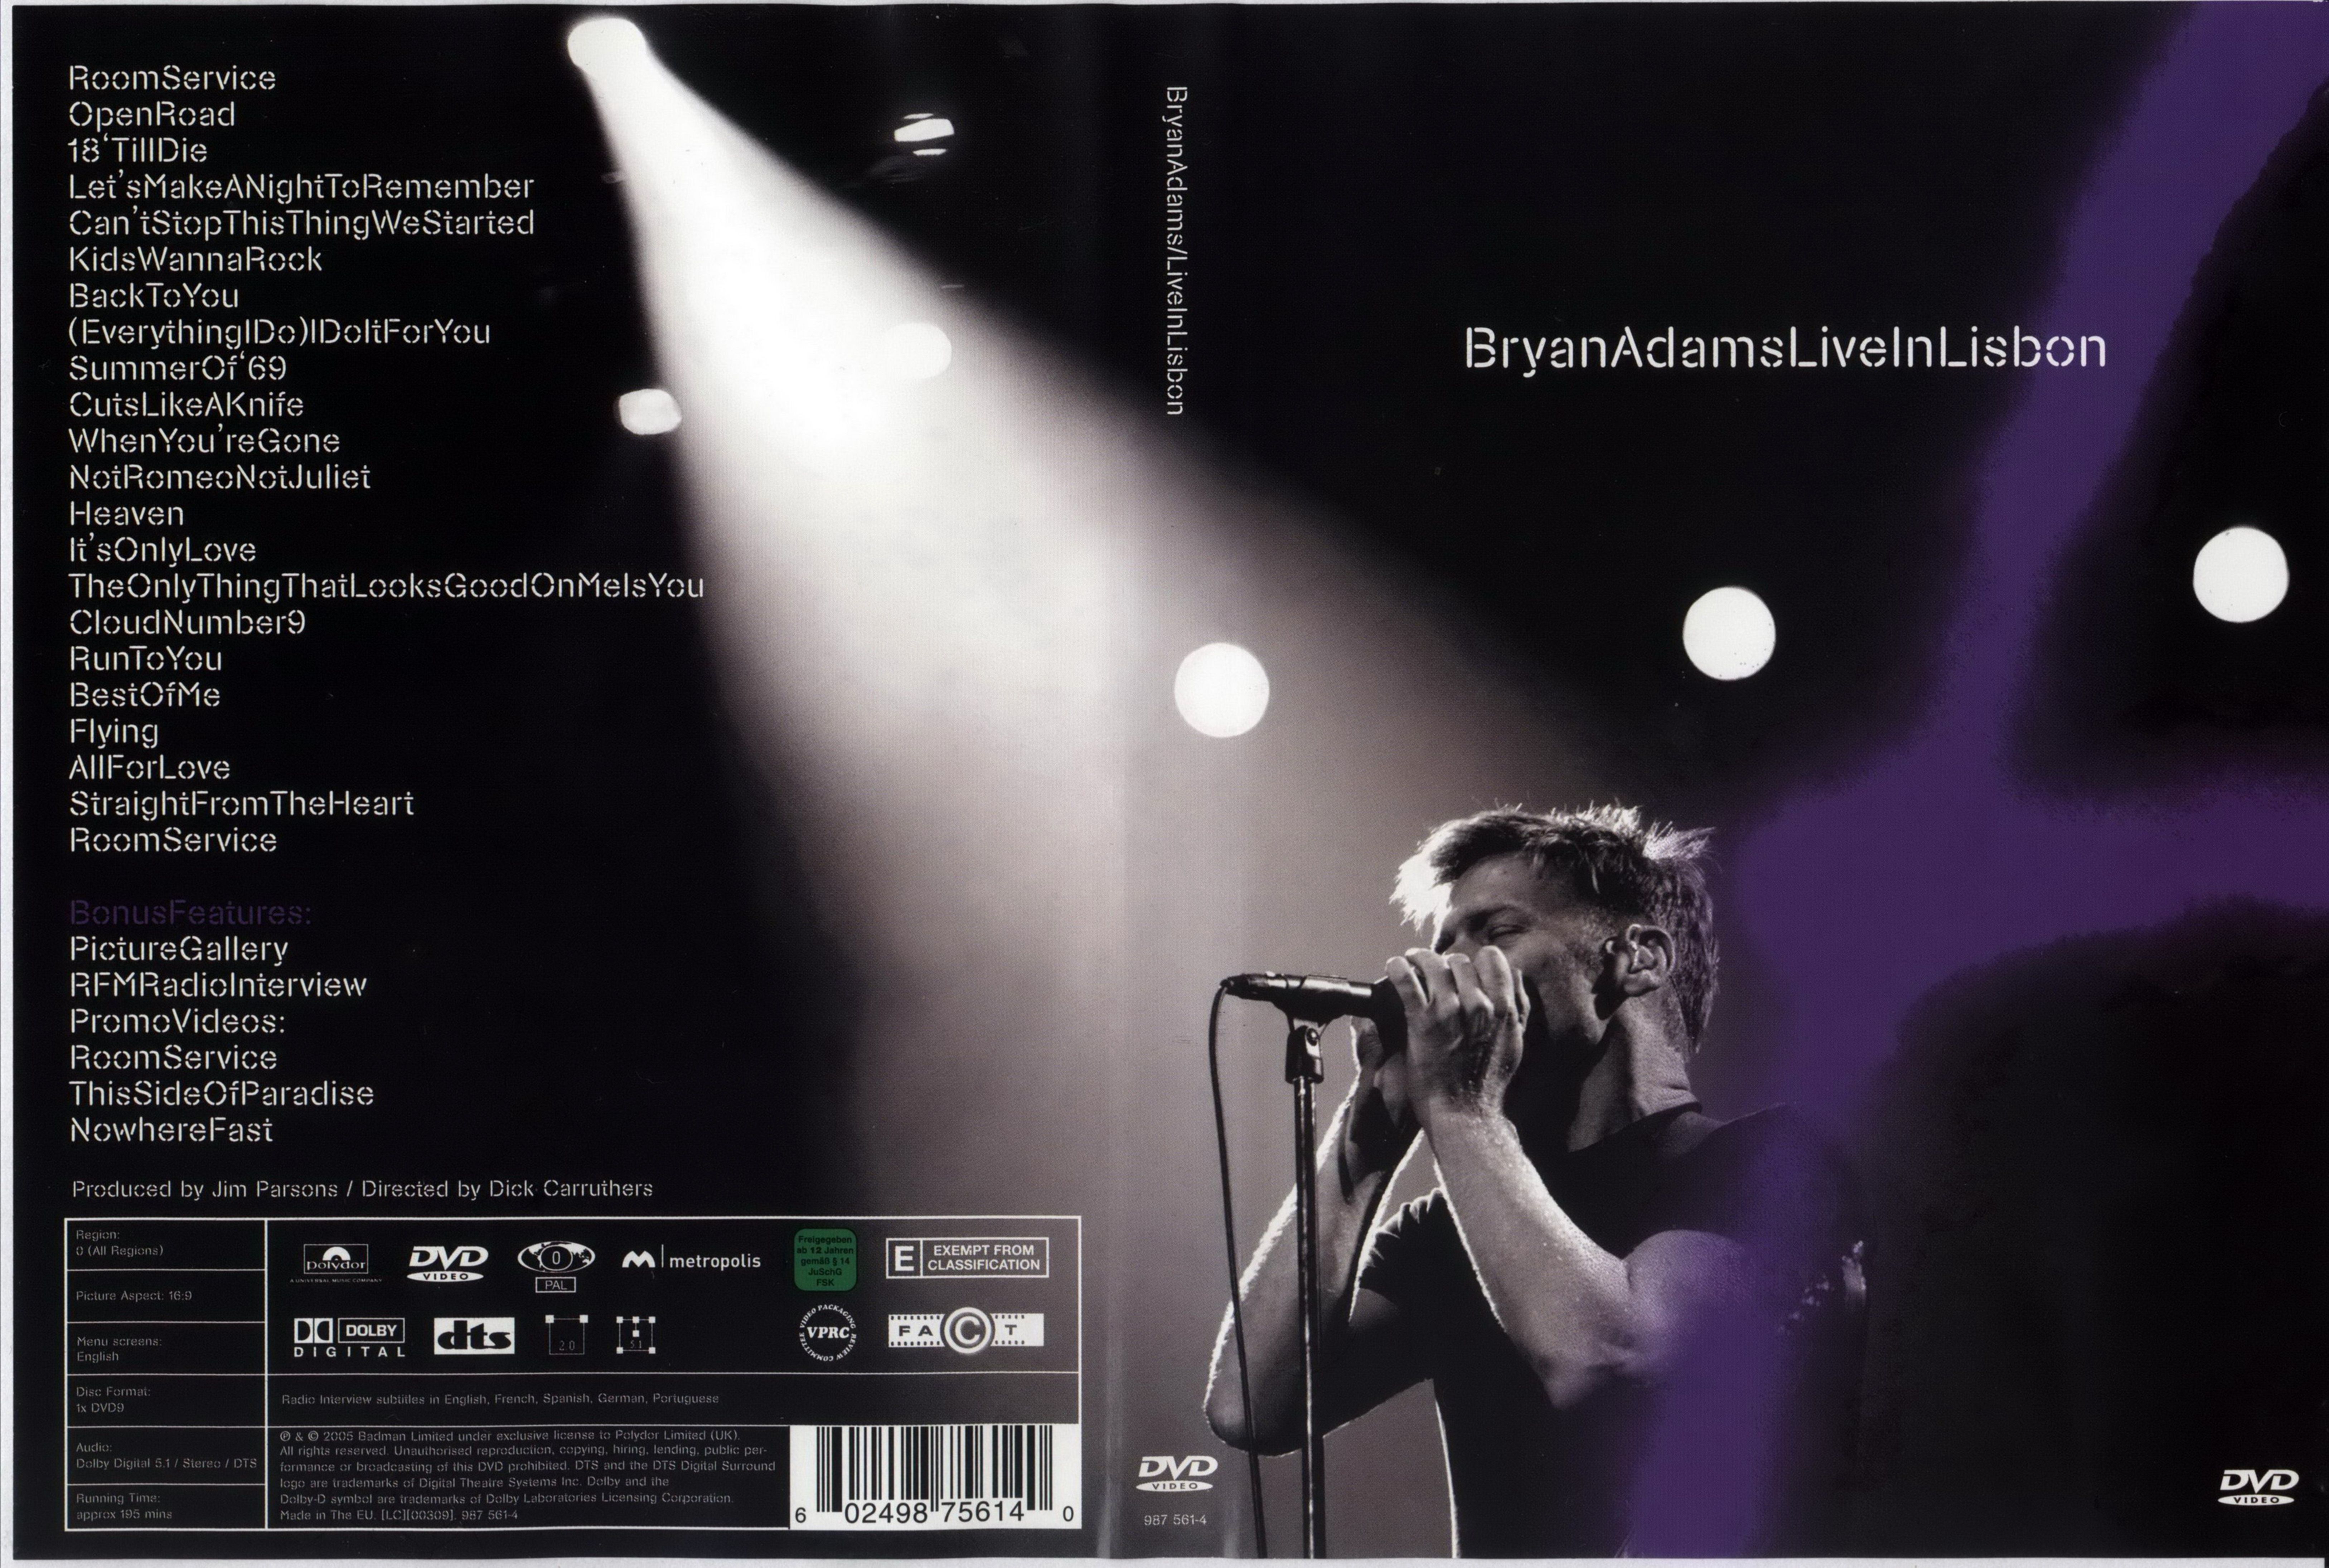 Jaquette DVD Bryan Adams Live in Lisbon